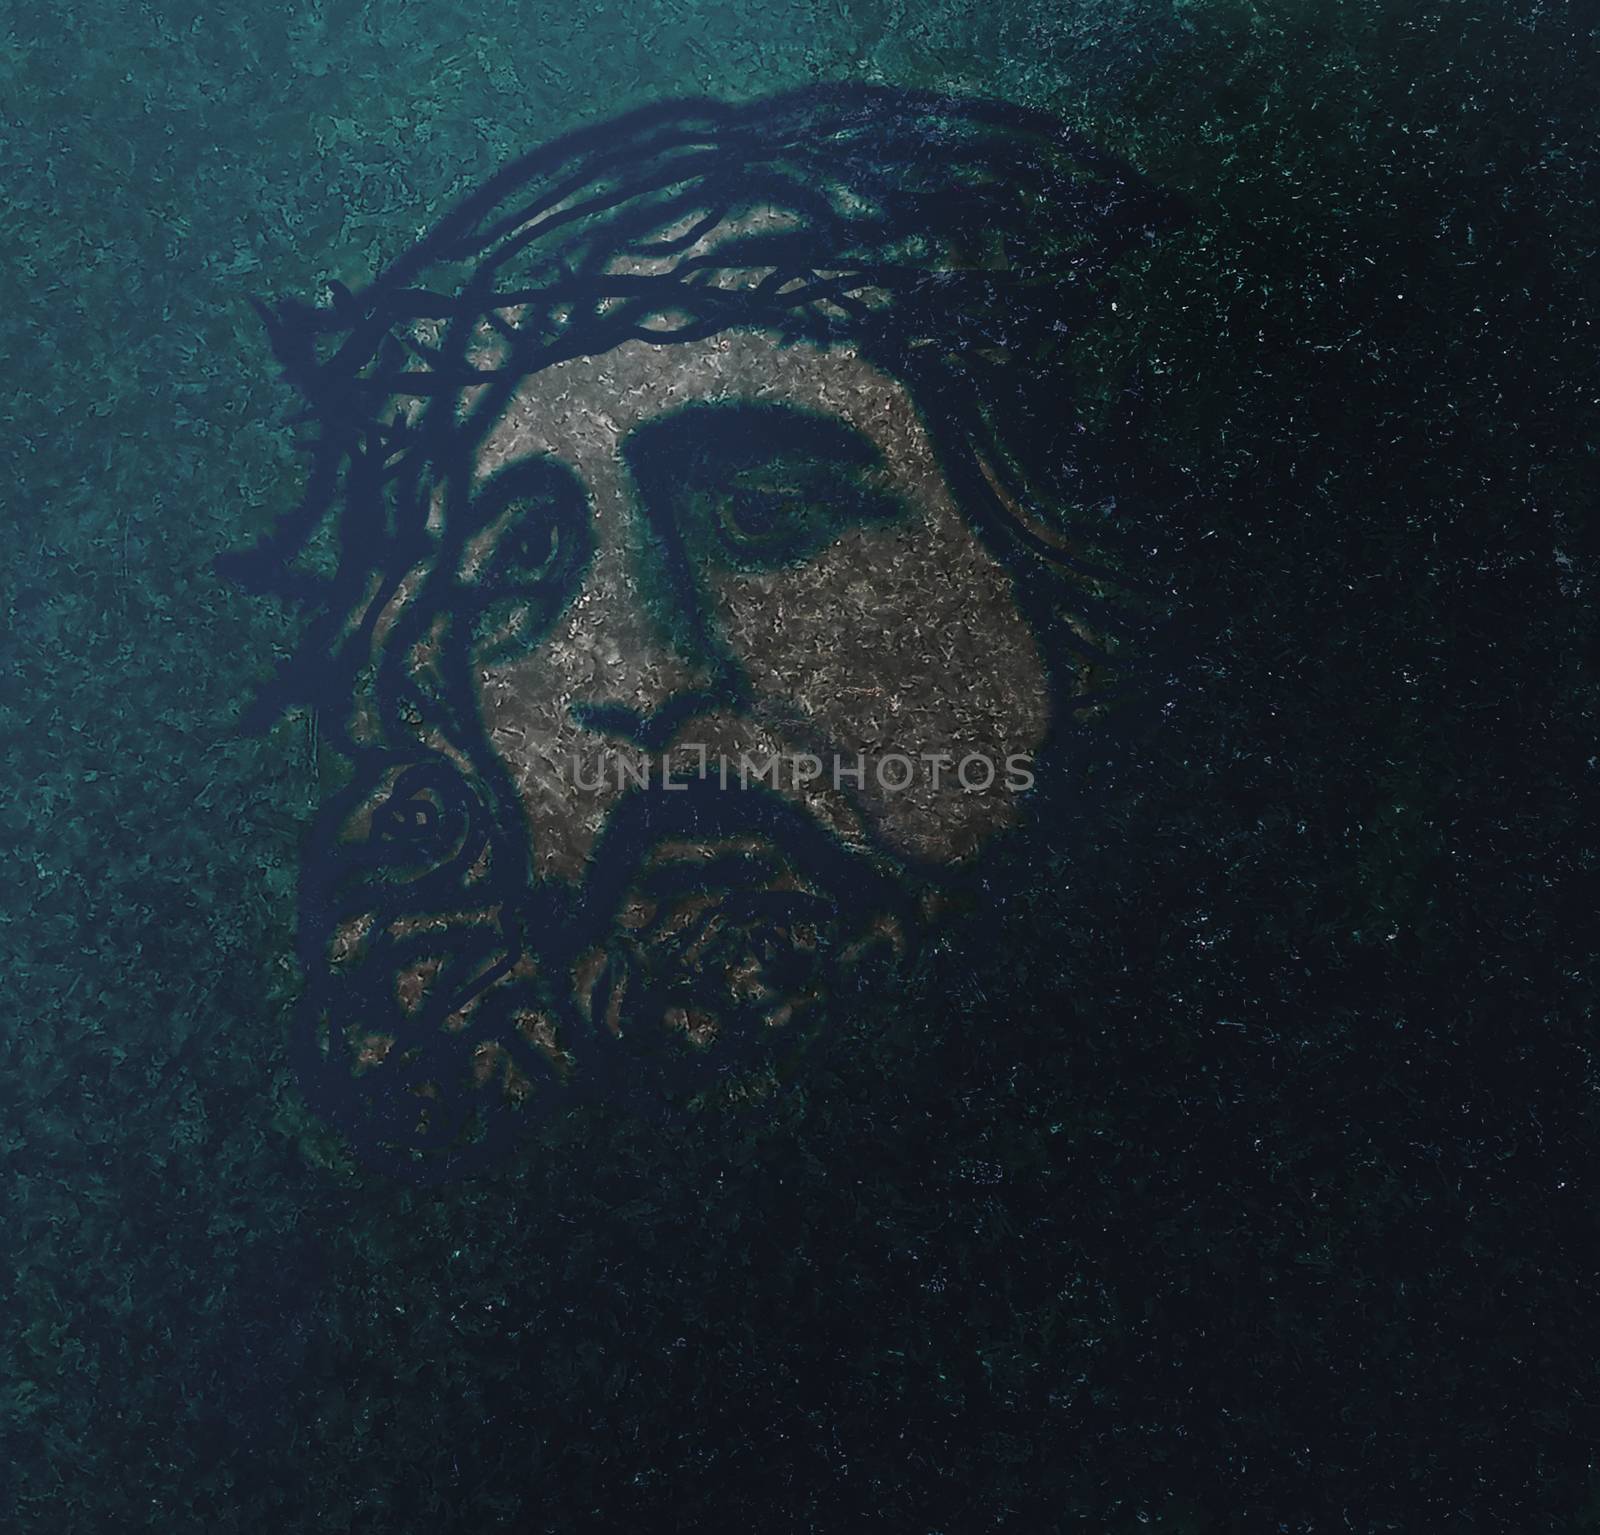 Portrait of Jesus, grunge illustration by JackyBrown